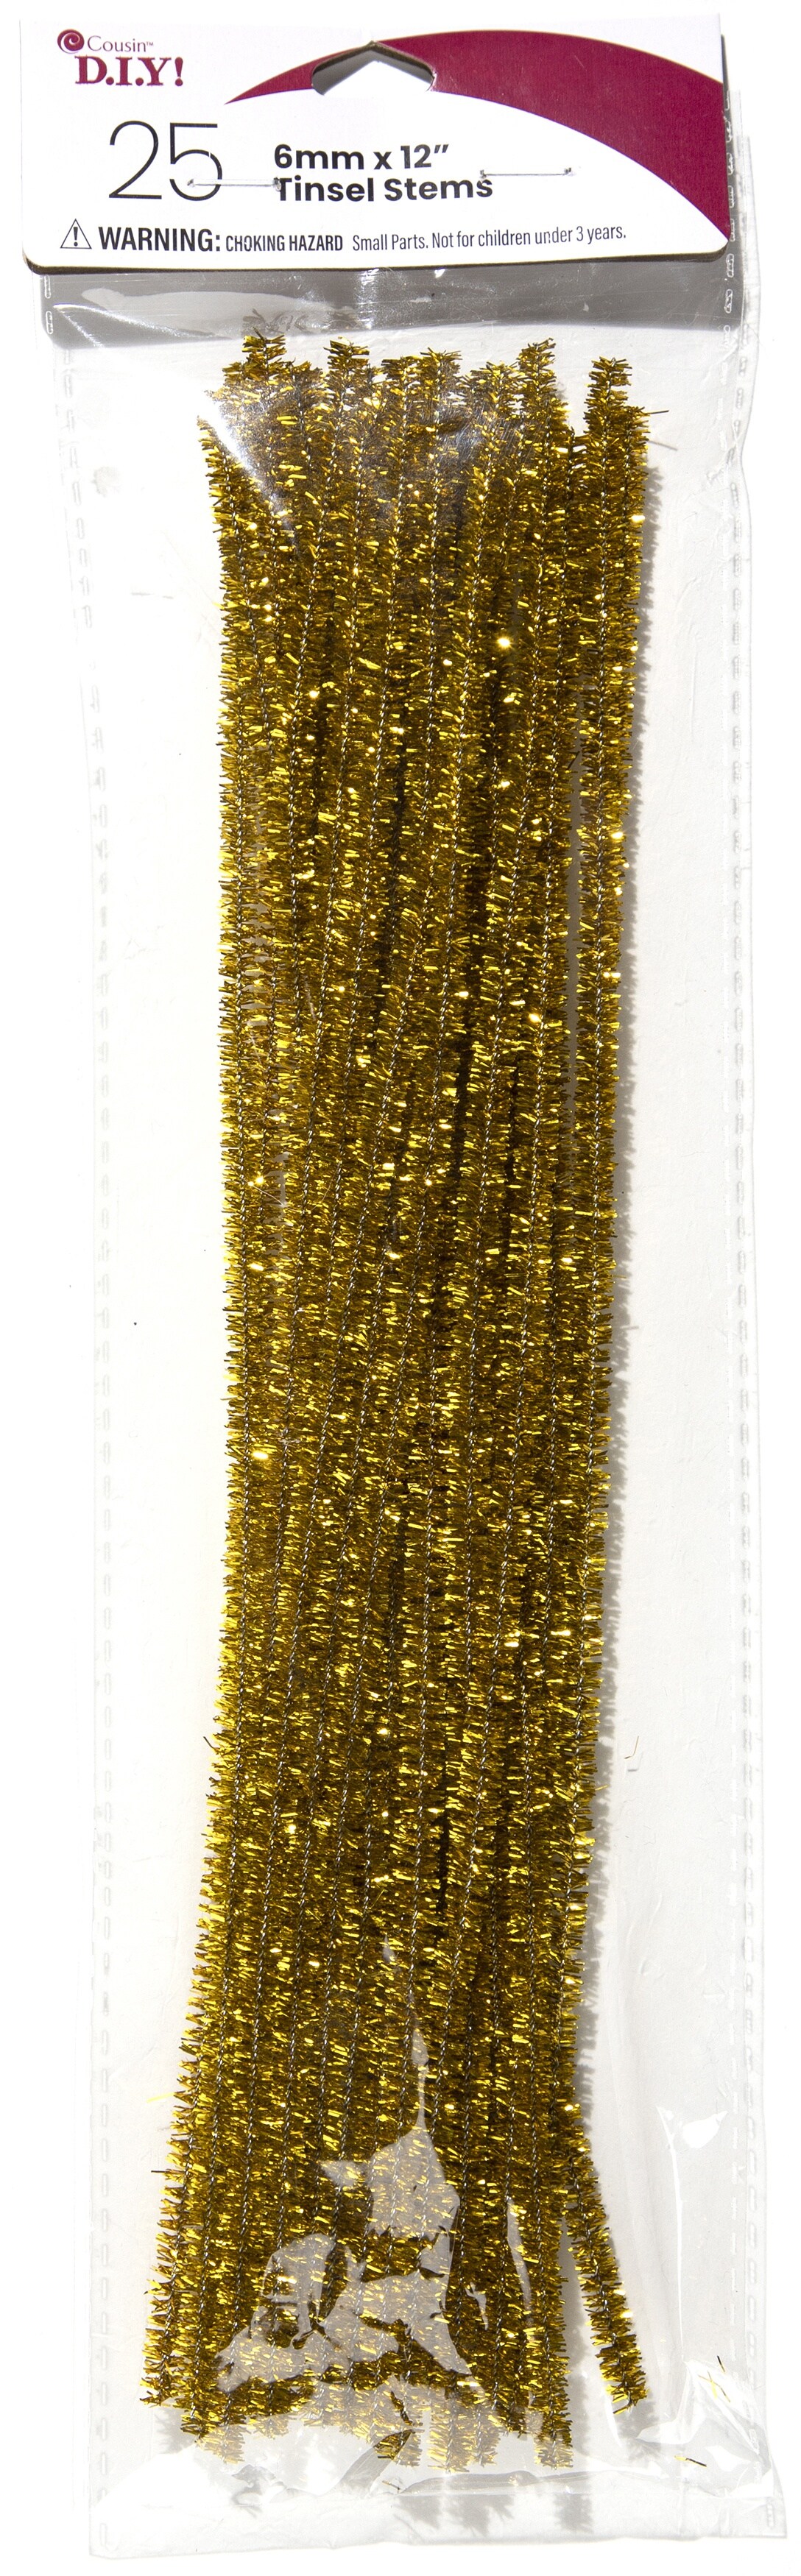 CousinDIY Tinsel Stems 6mmx12&#x22; 25/Pkg-Gold